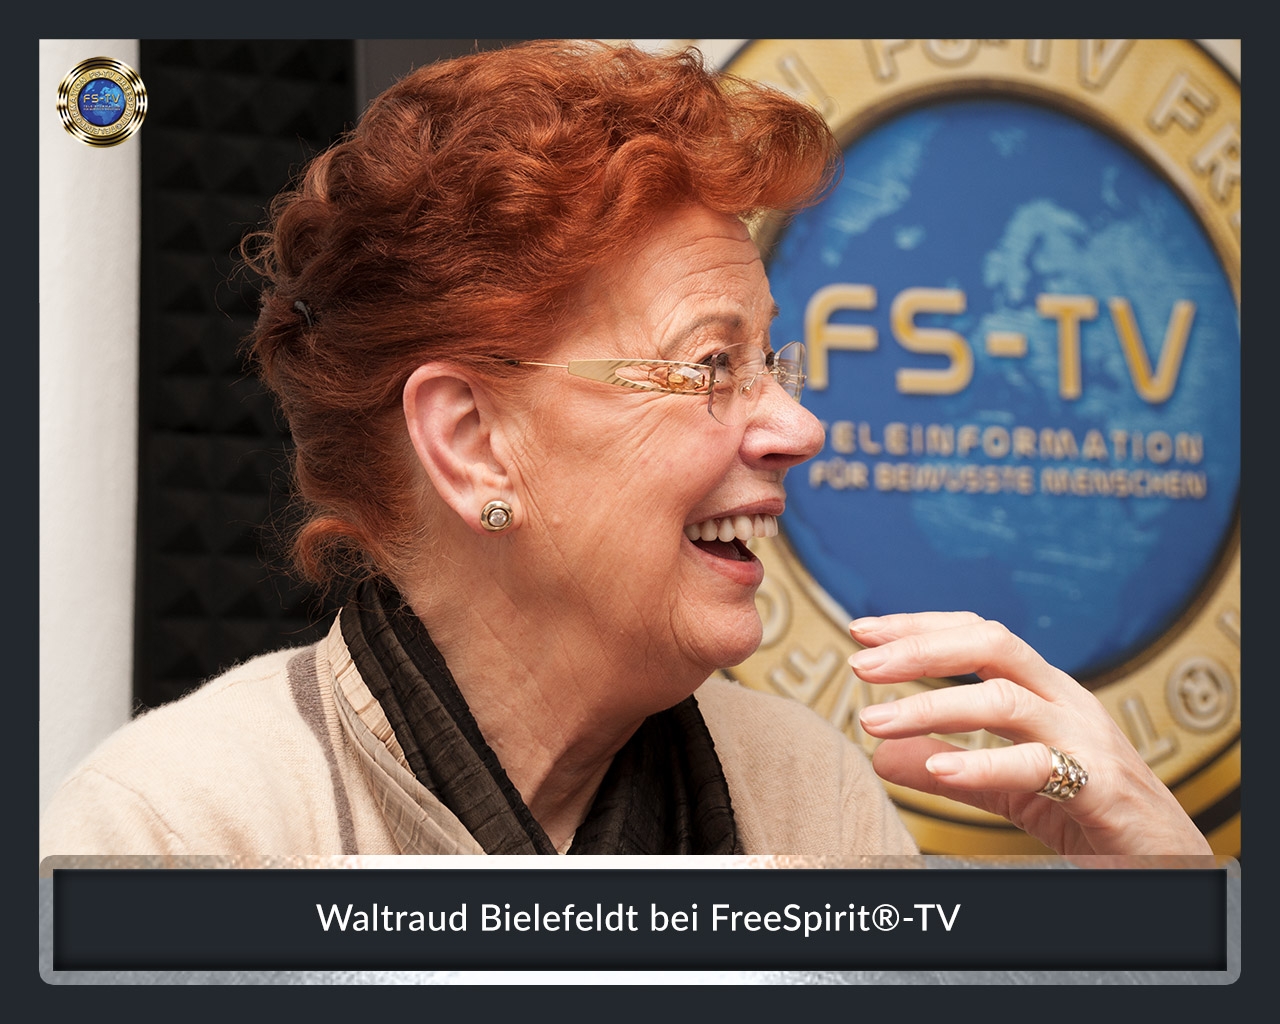 FS-TV-Bildergallerie-Waltraud-Bielefeldt-1